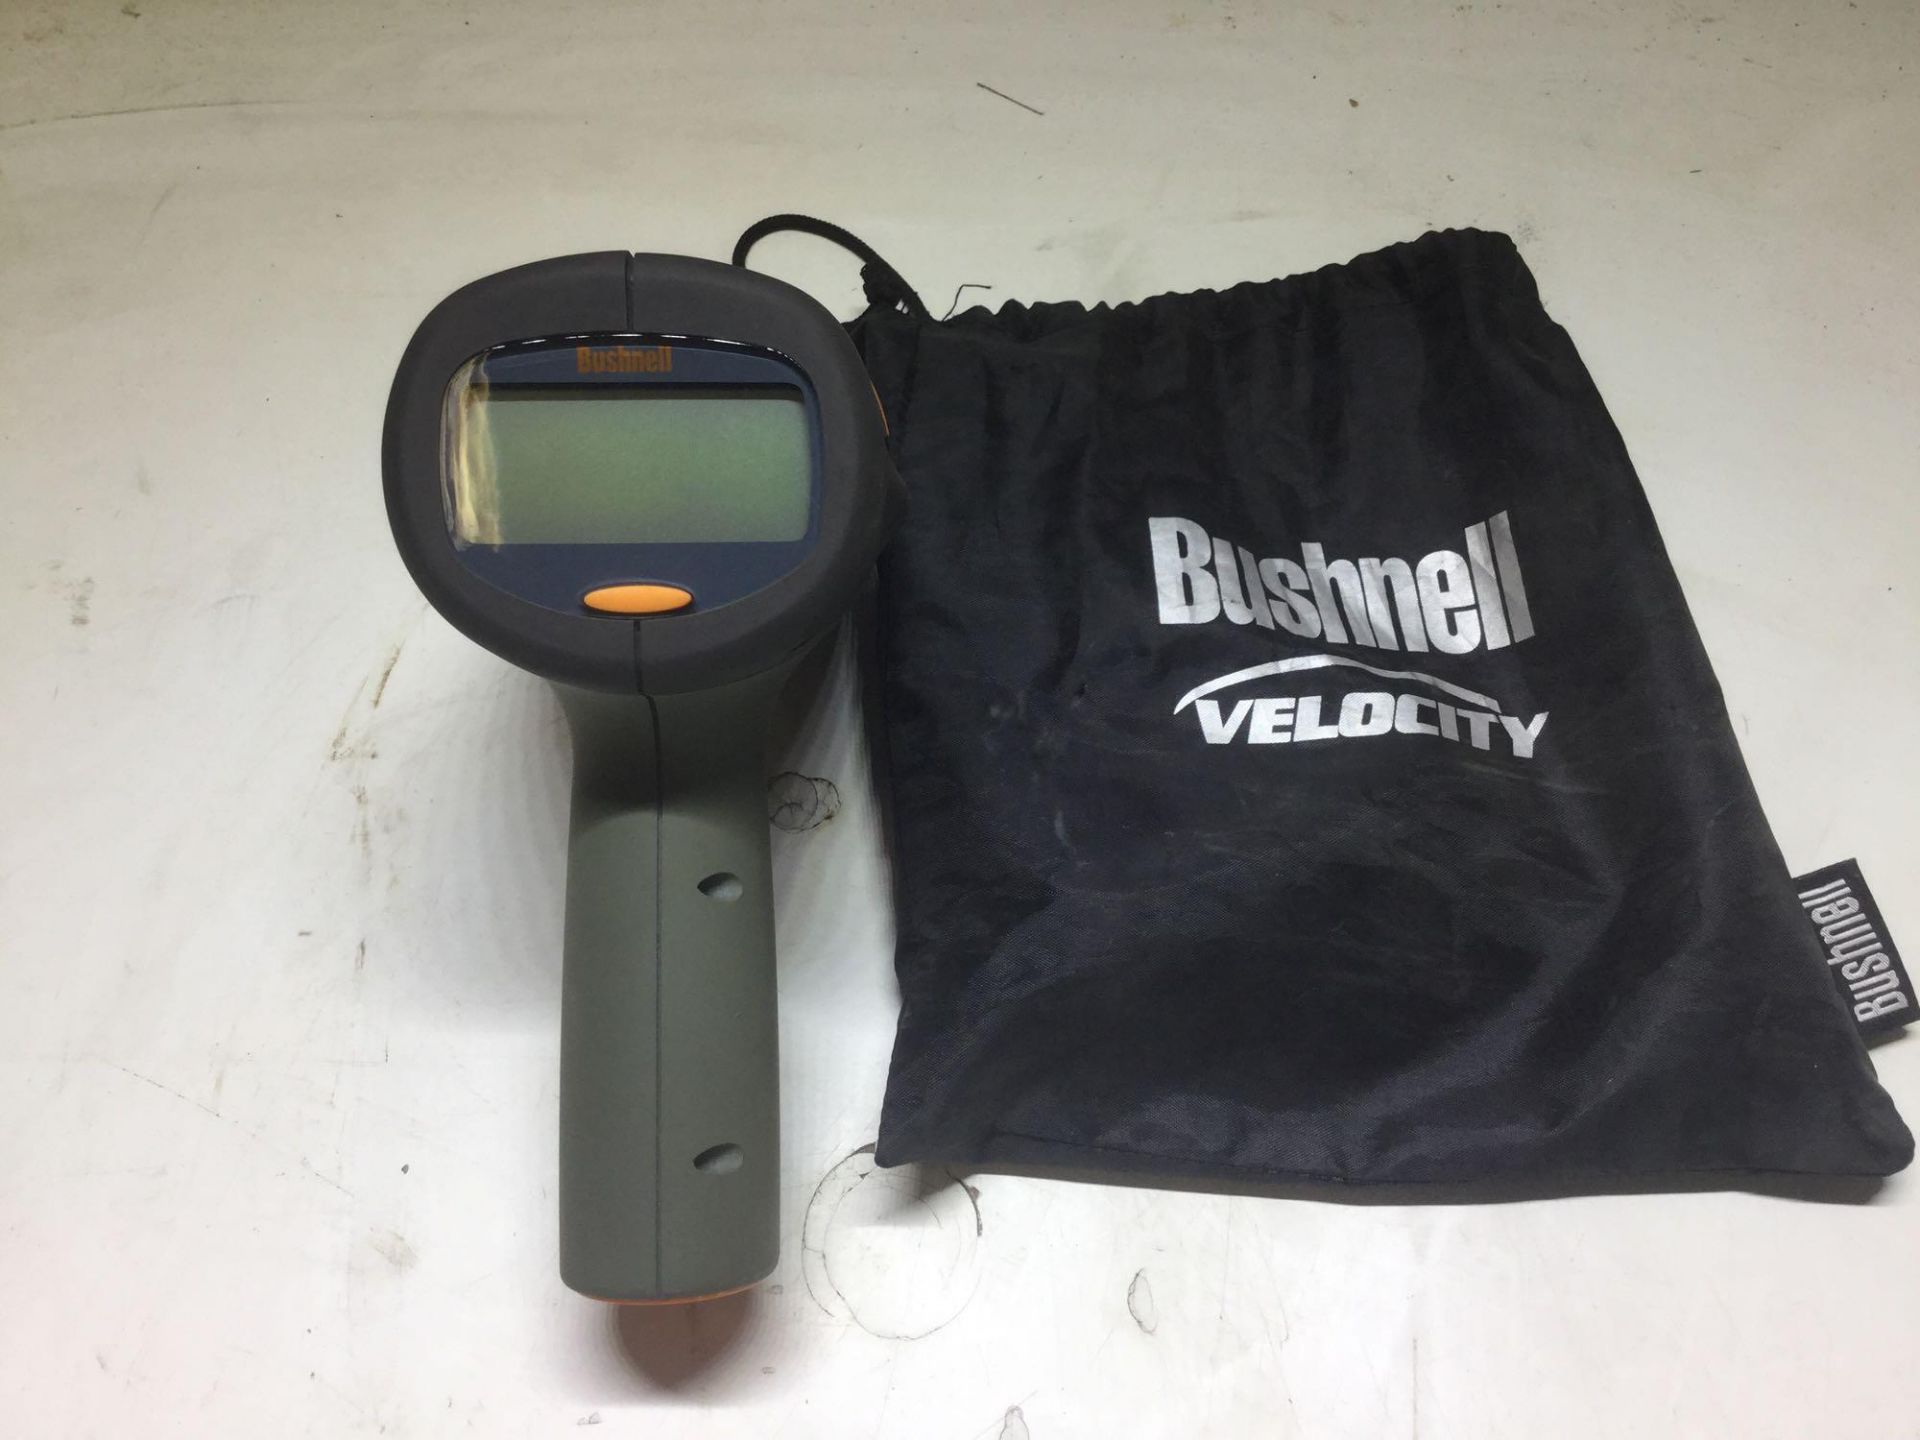 Bushnell velocity speed gun - Image 2 of 2